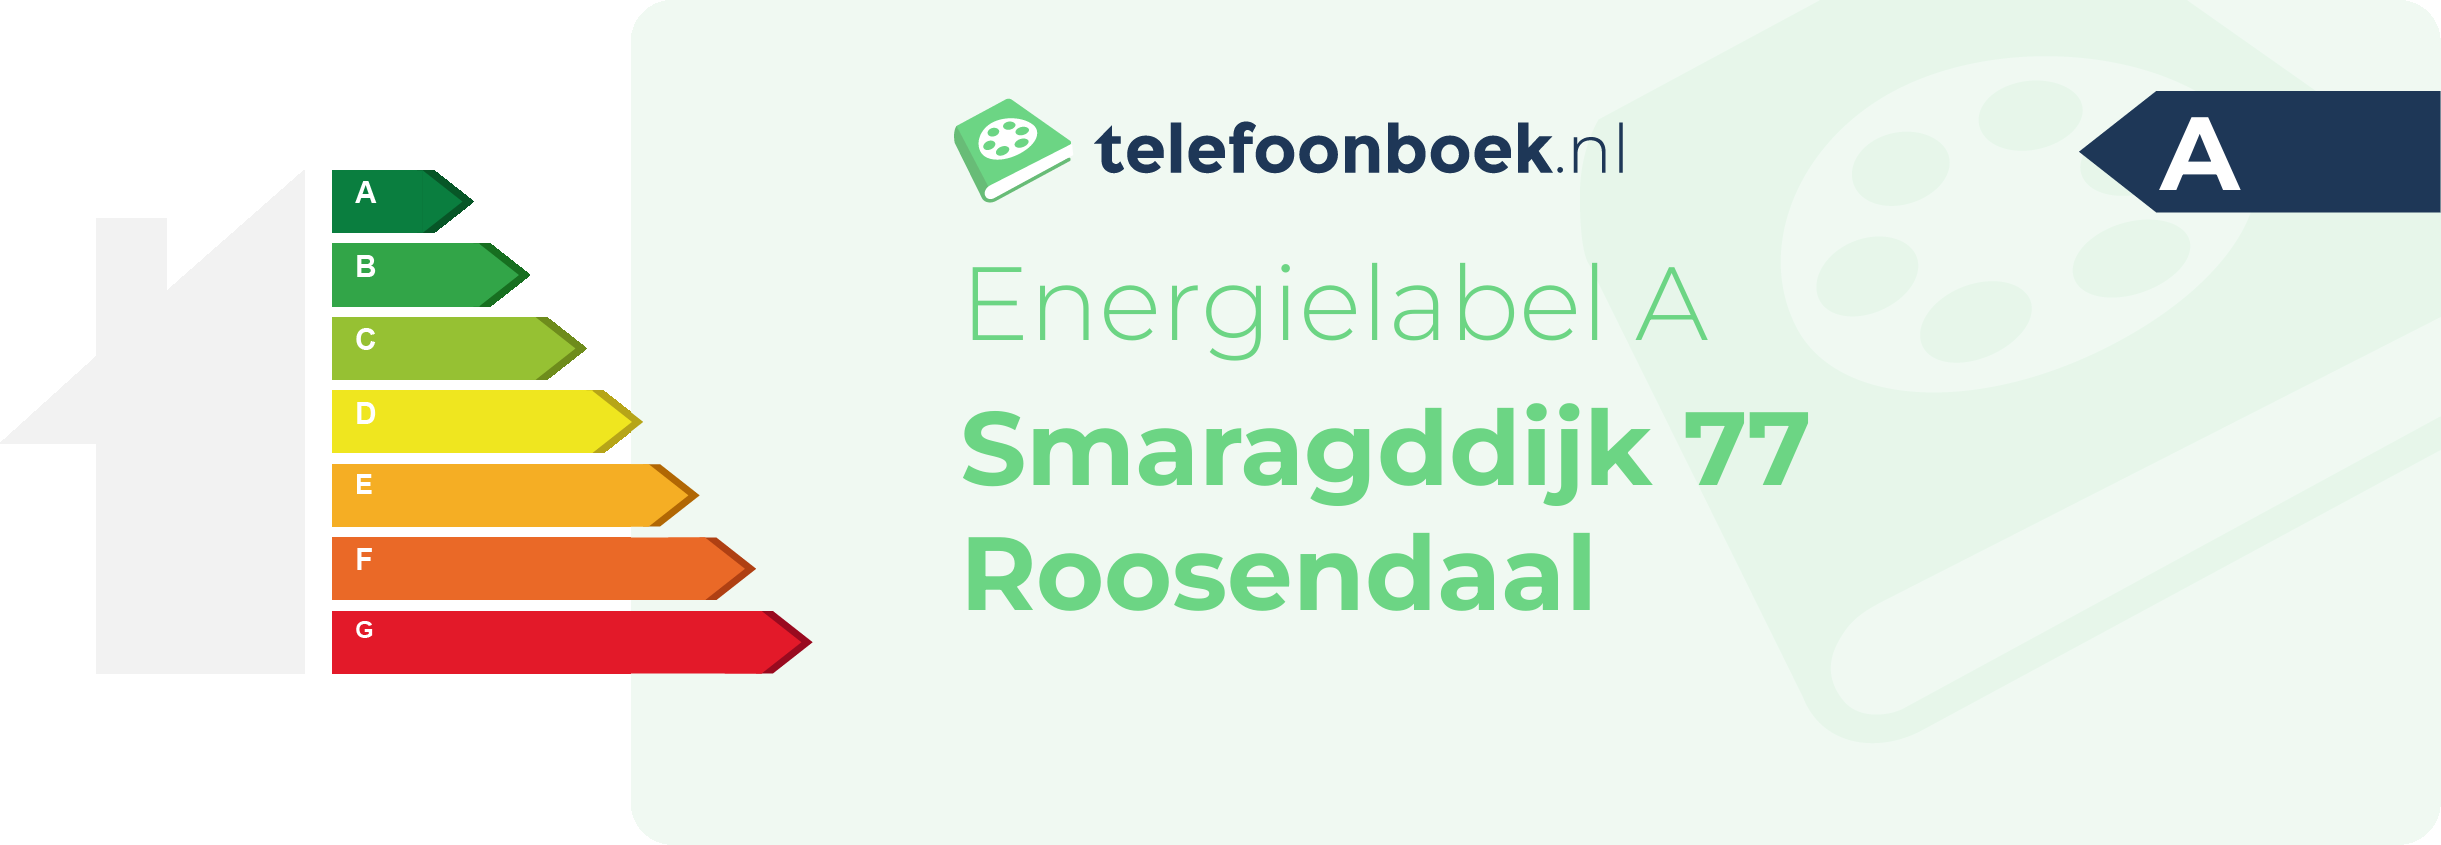 Energielabel Smaragddijk 77 Roosendaal